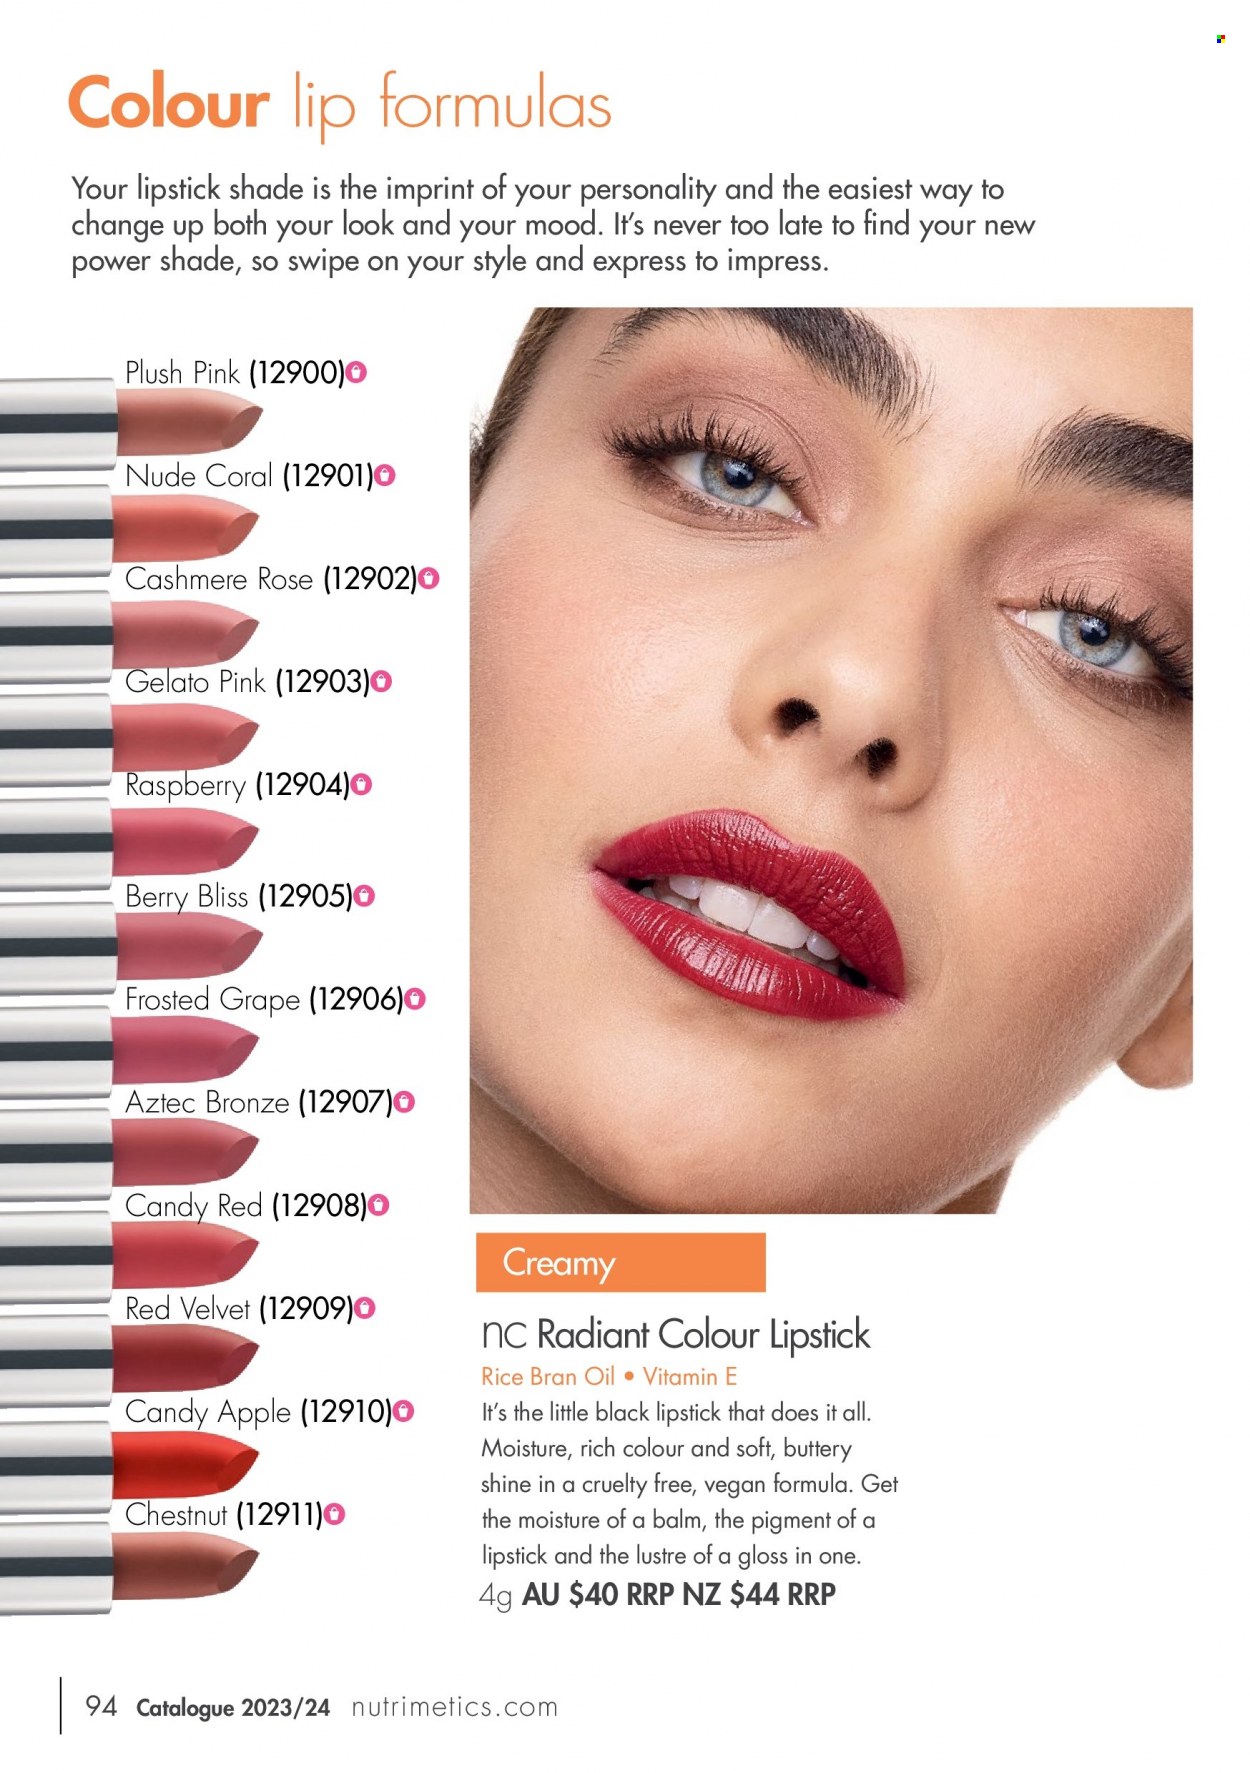 Nutrimetics Catalogue - Sales products - Nutrimetics, lipstick. Page 94.